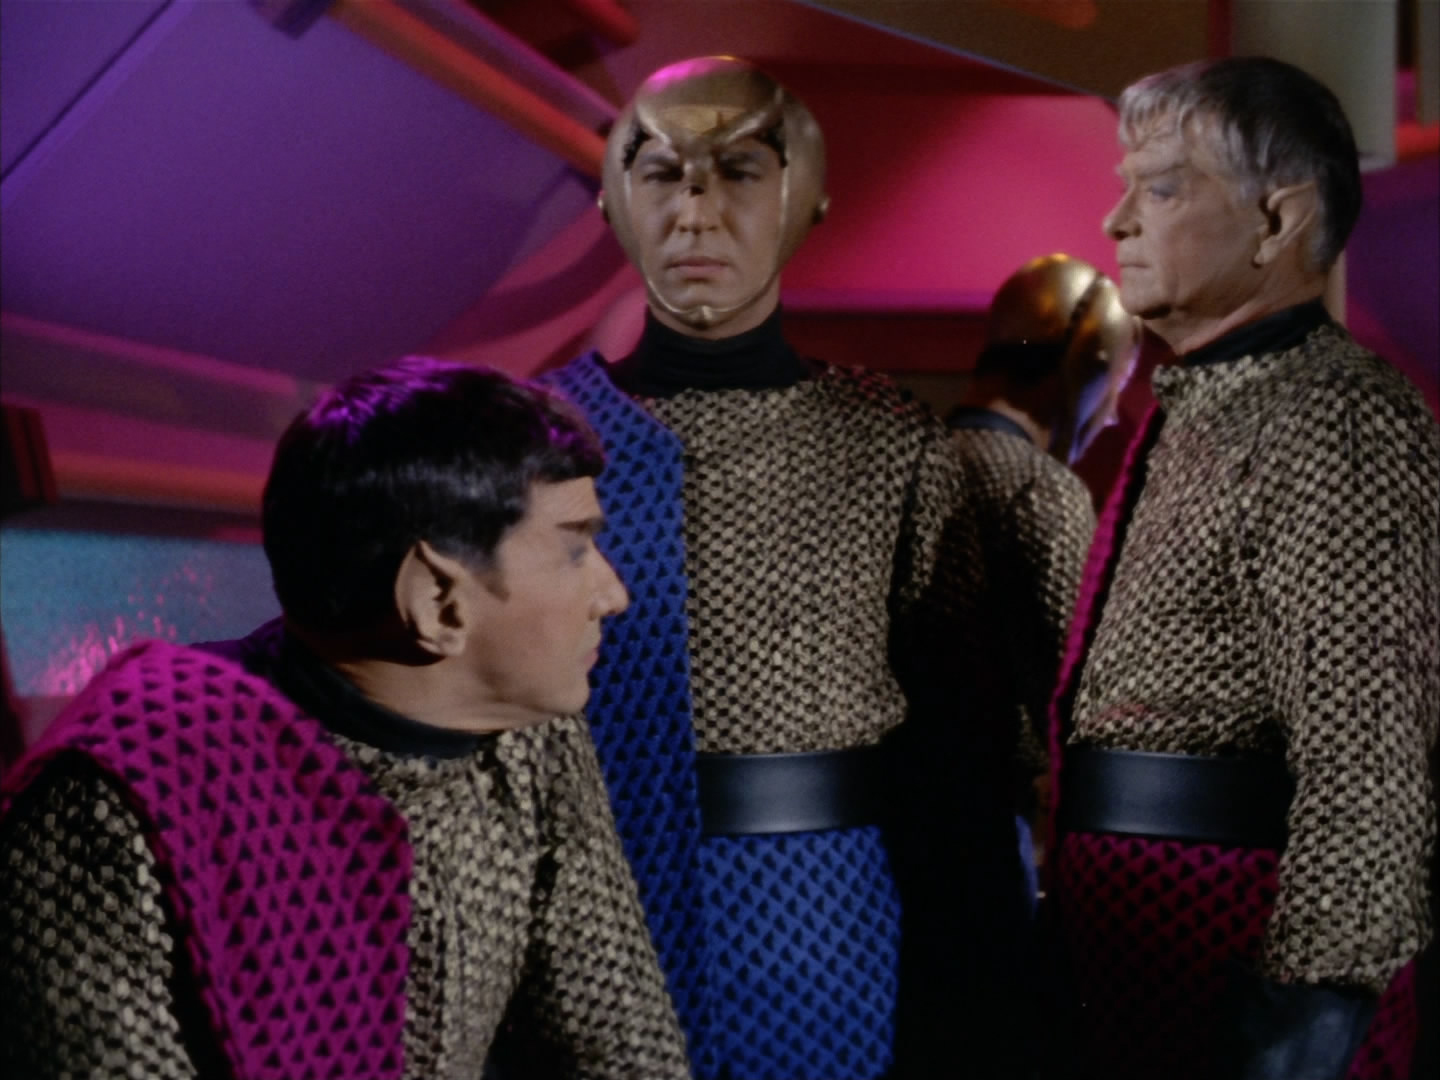 Star Trek TOS costumes - Romulans